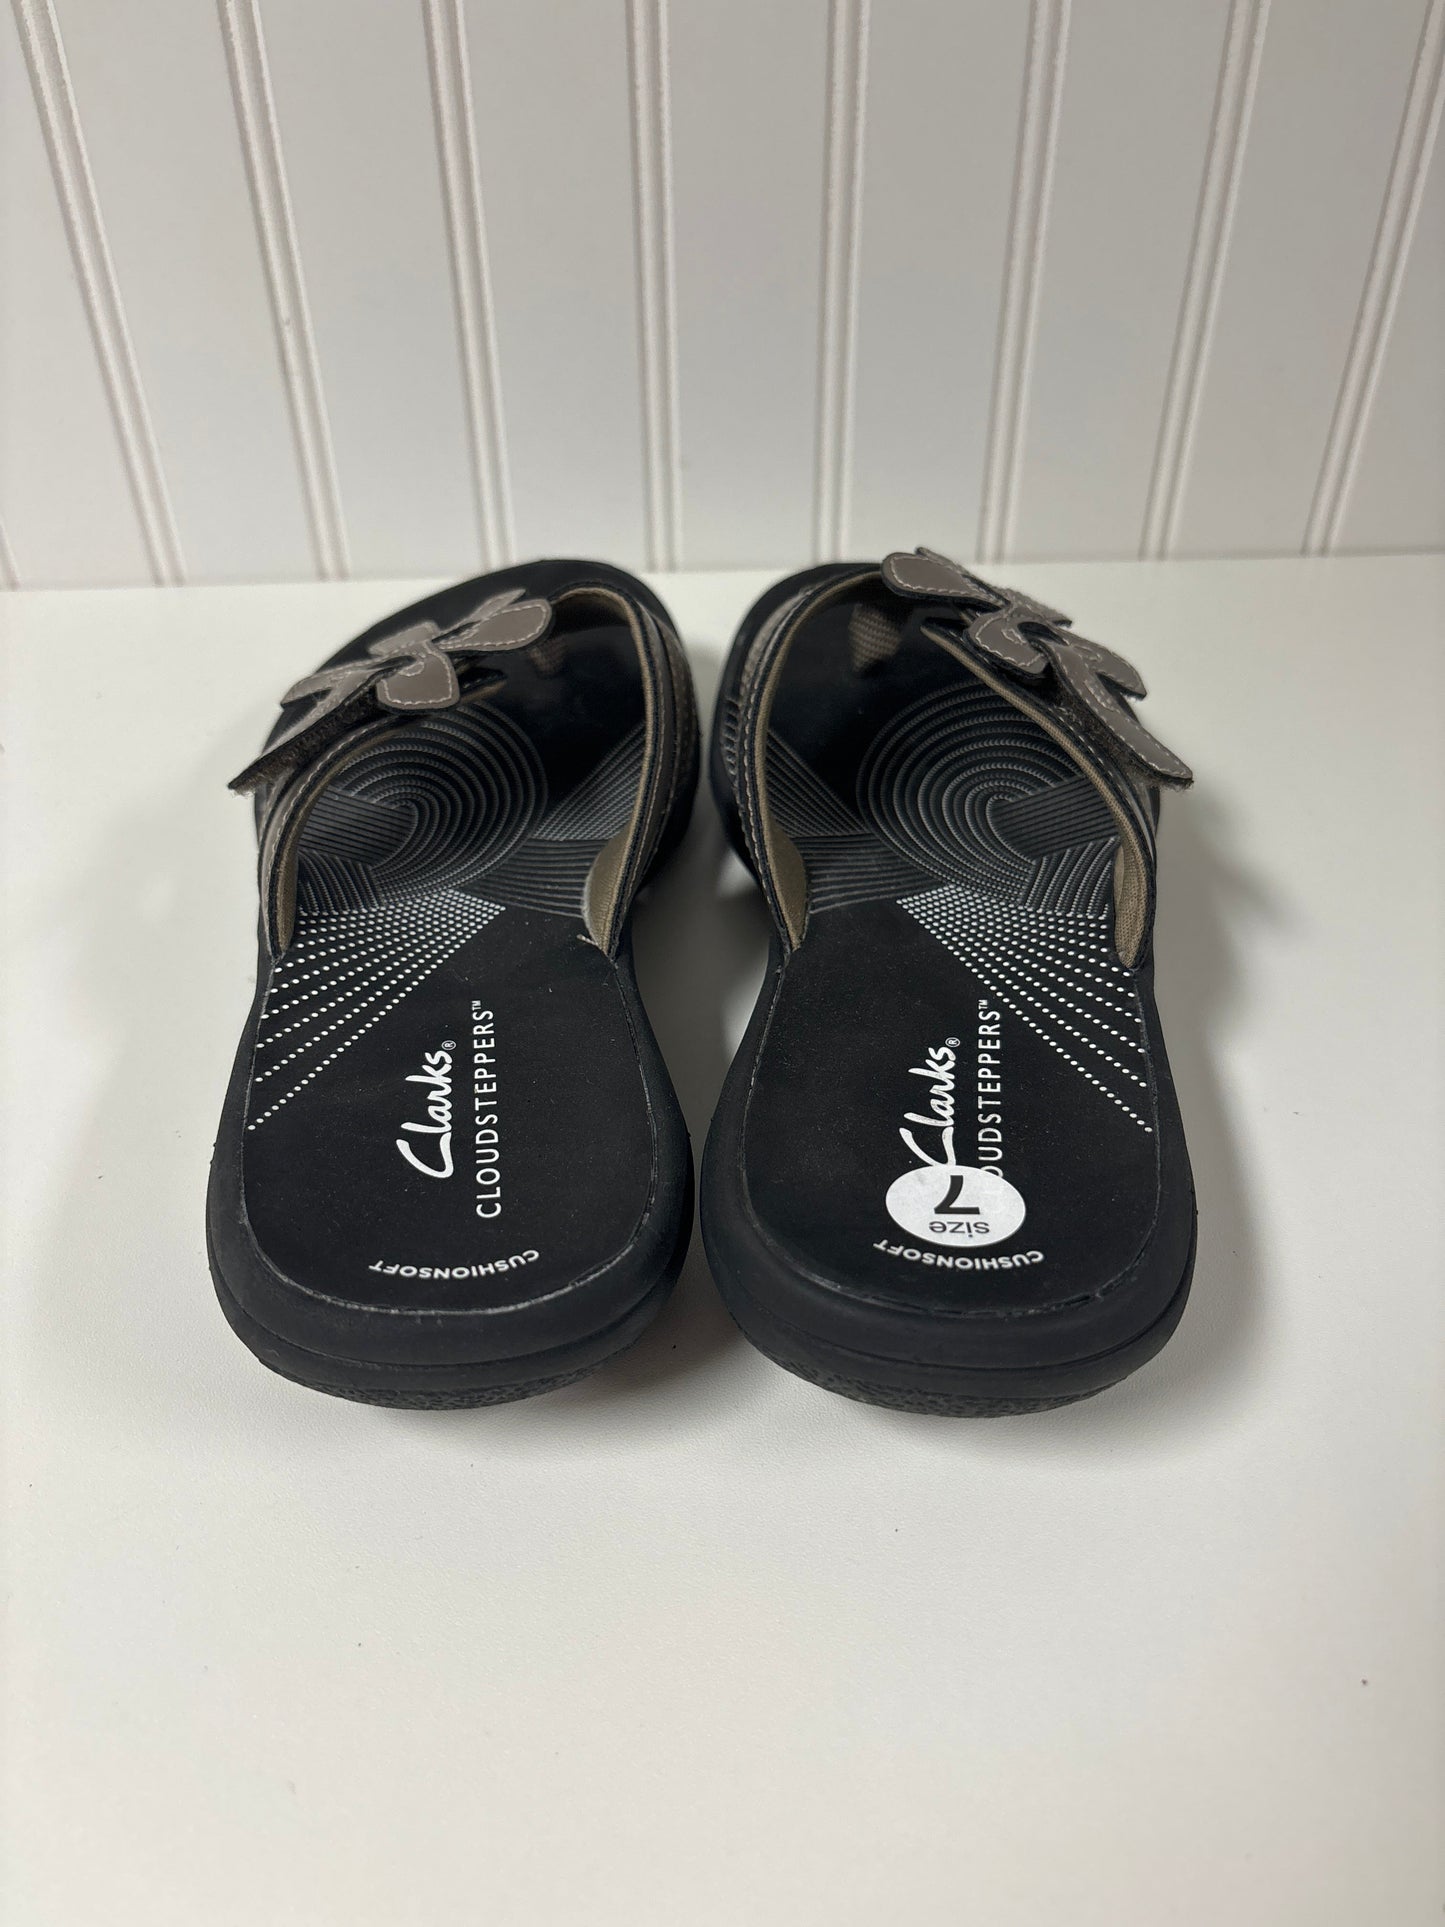 Sandals Flip Flops By Clarks  Size: 7